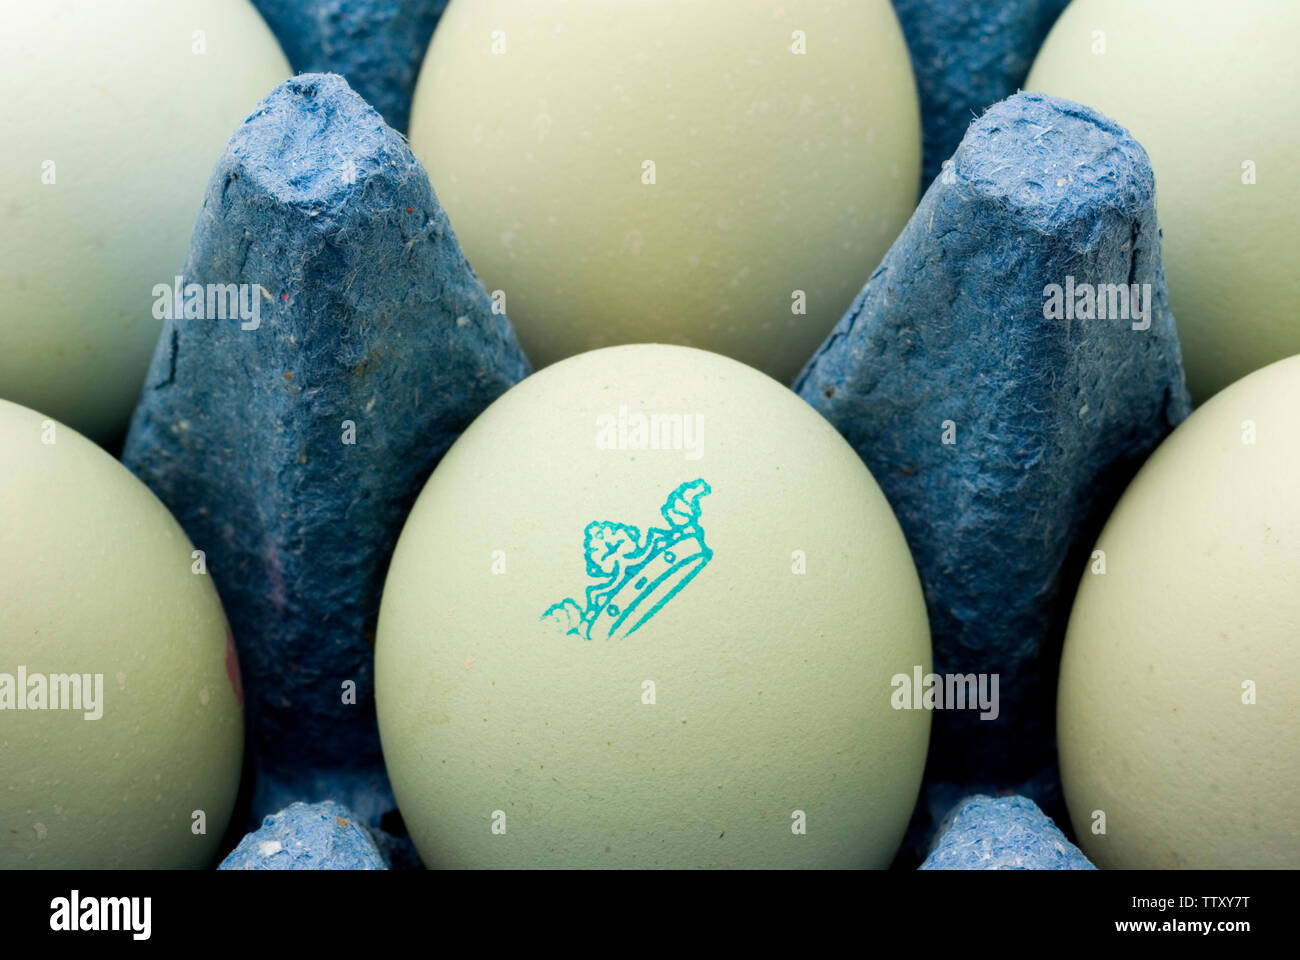 Alte Cotswold Legbar Eier Stockfoto